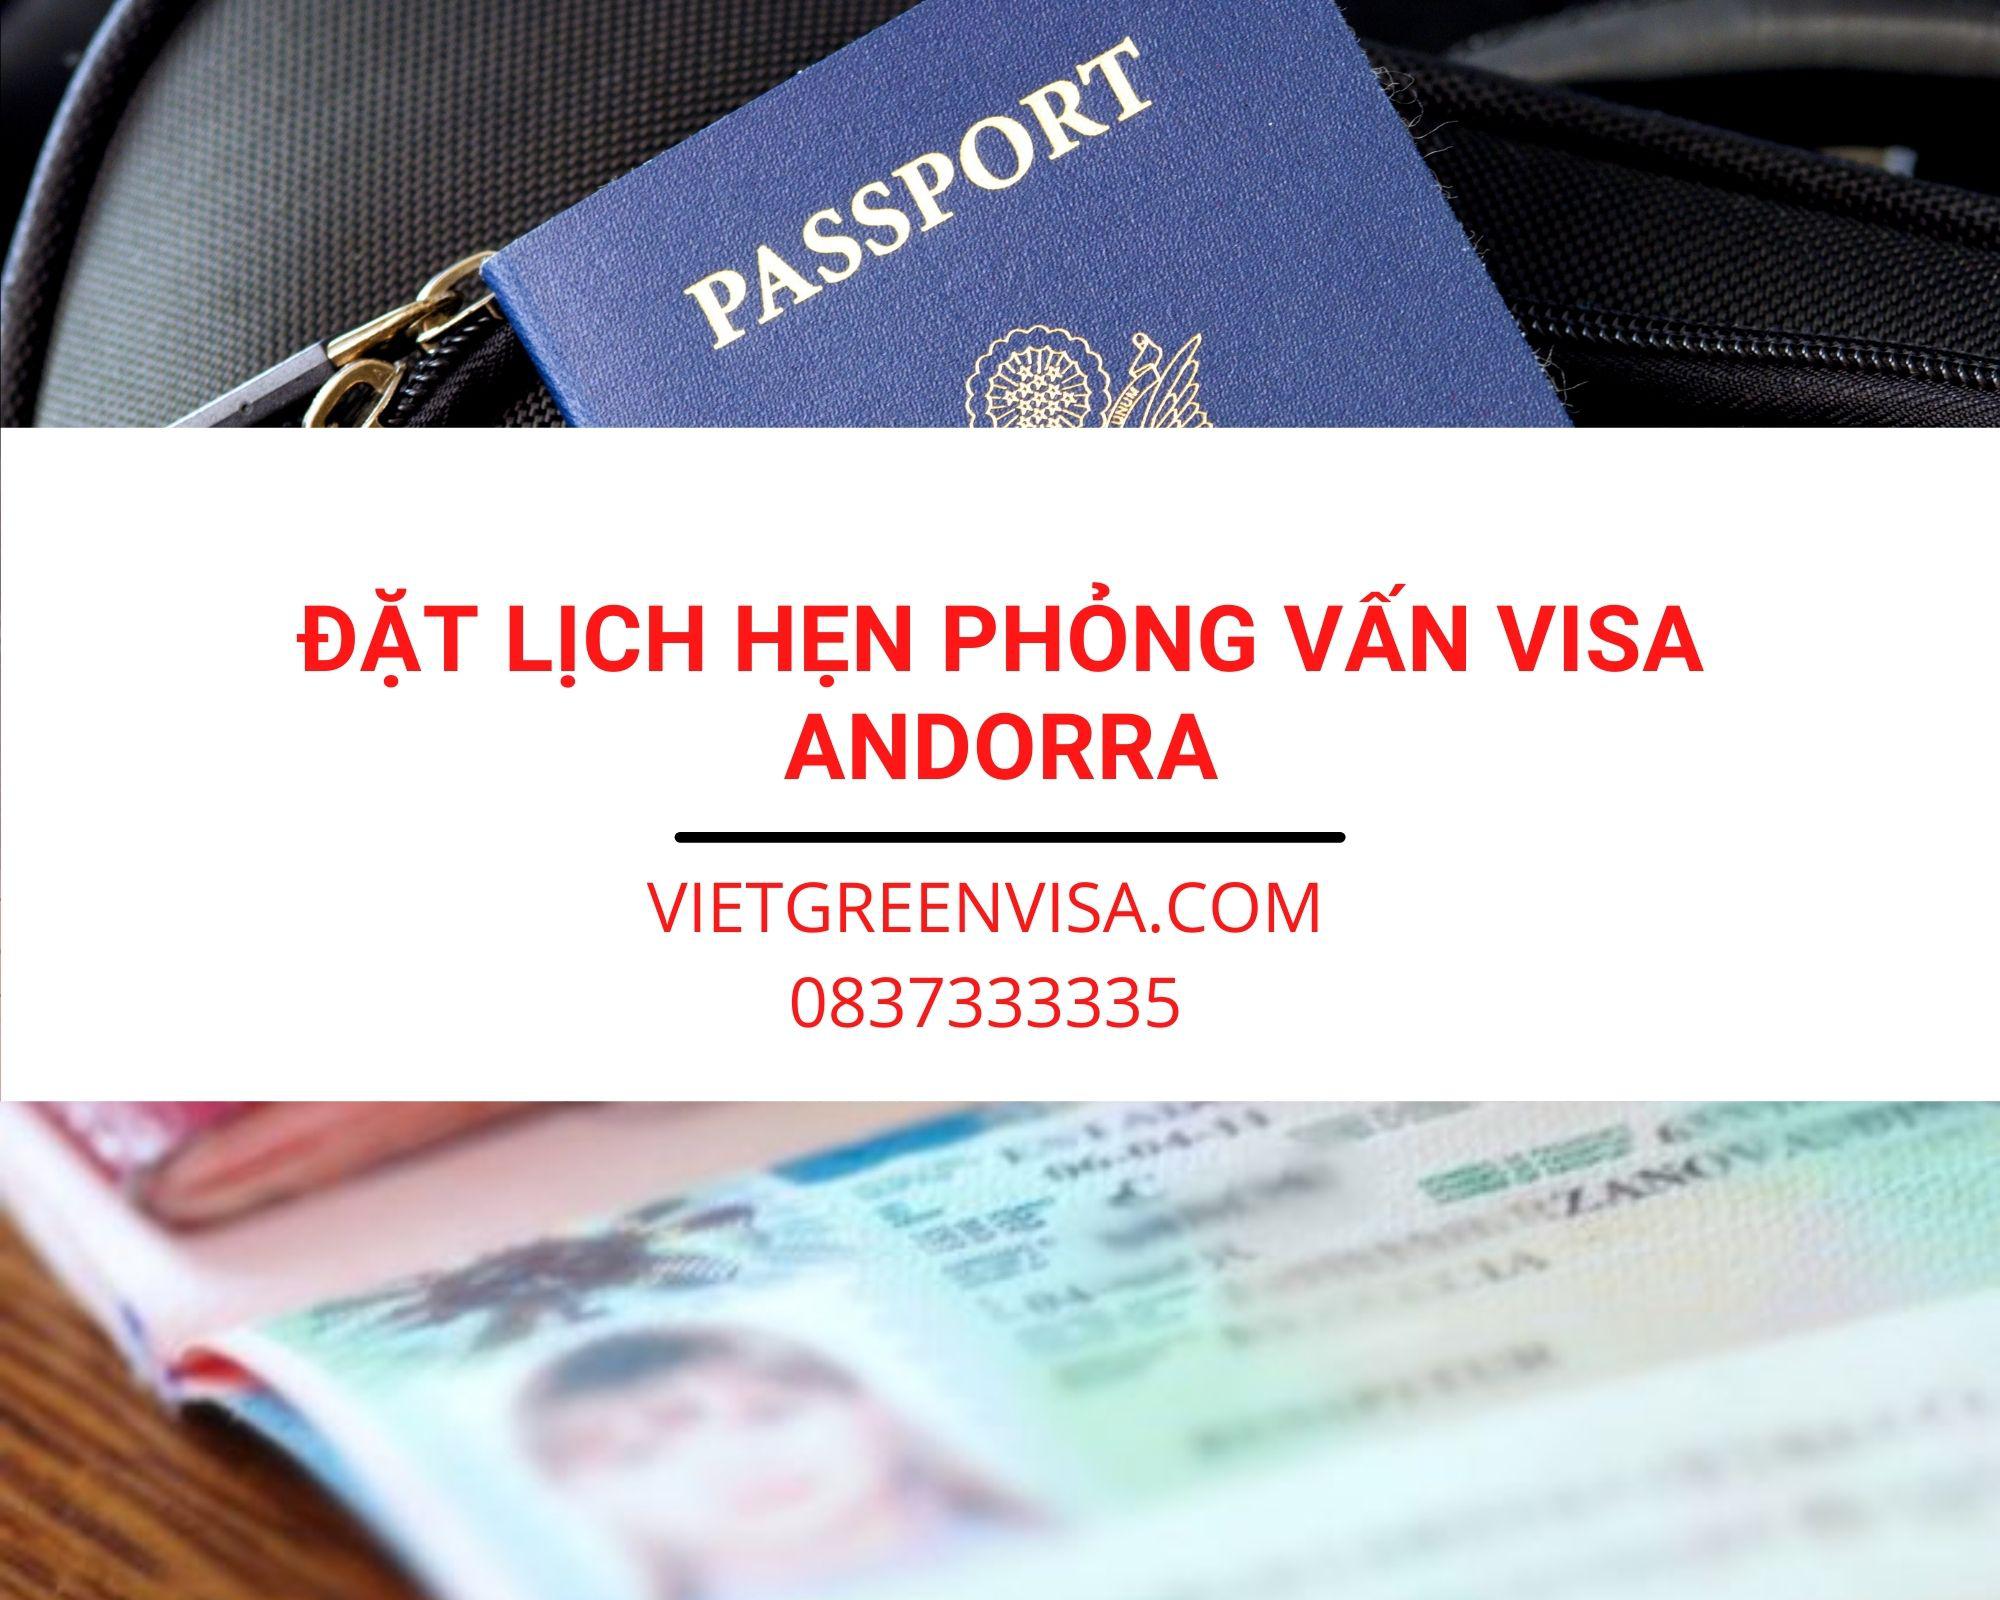 Viet Green Visa, đặt lịch hẹn xin visa Andorra, visa Andorra